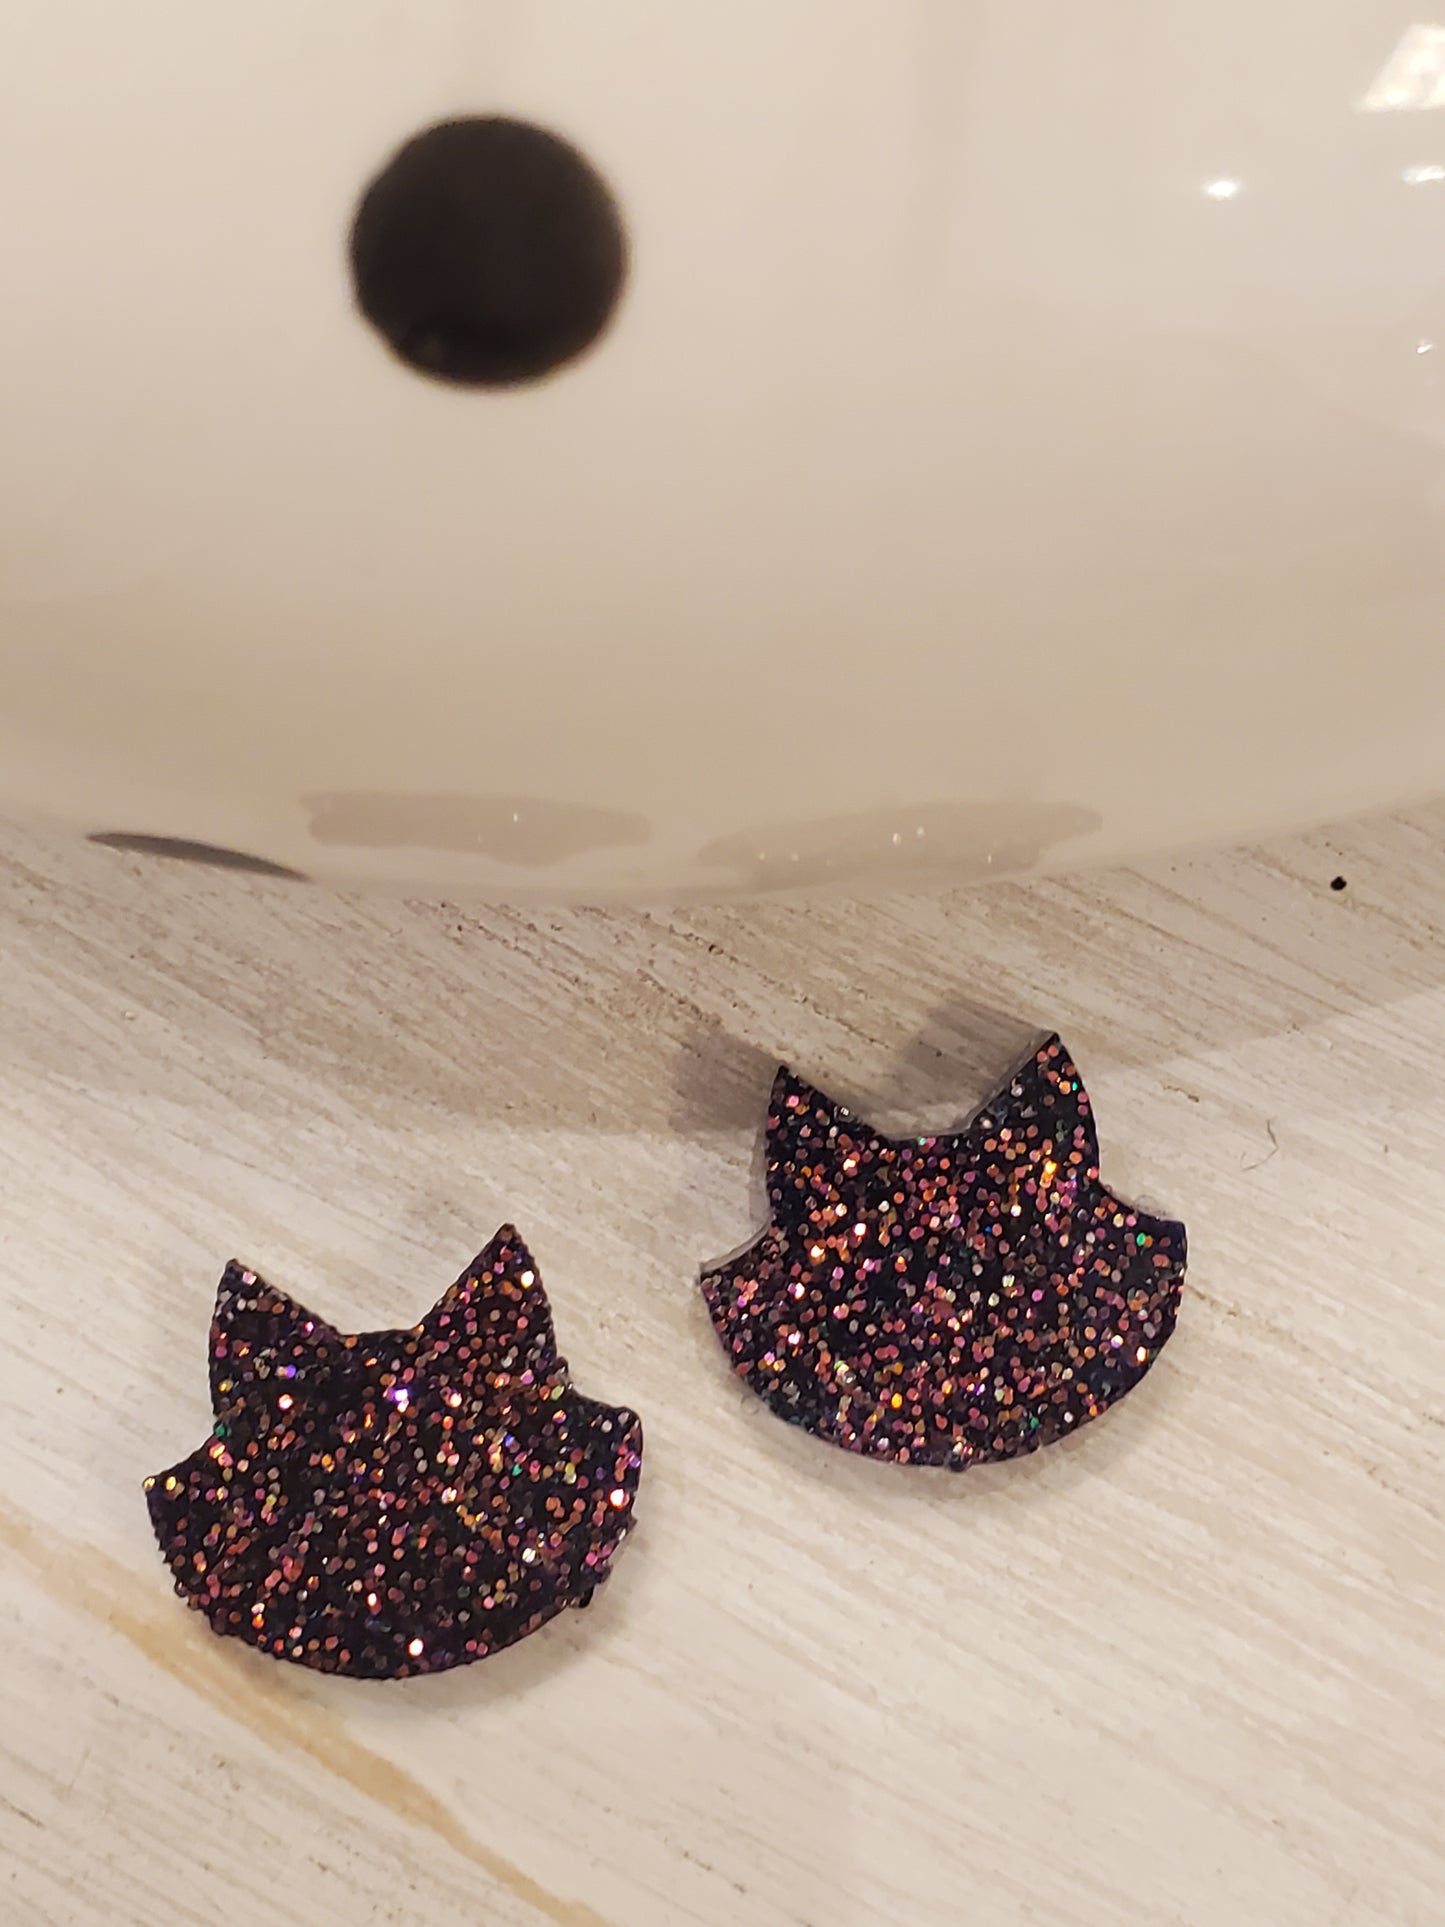 Handmade resin and glitter Cat Multi Earrings small studs